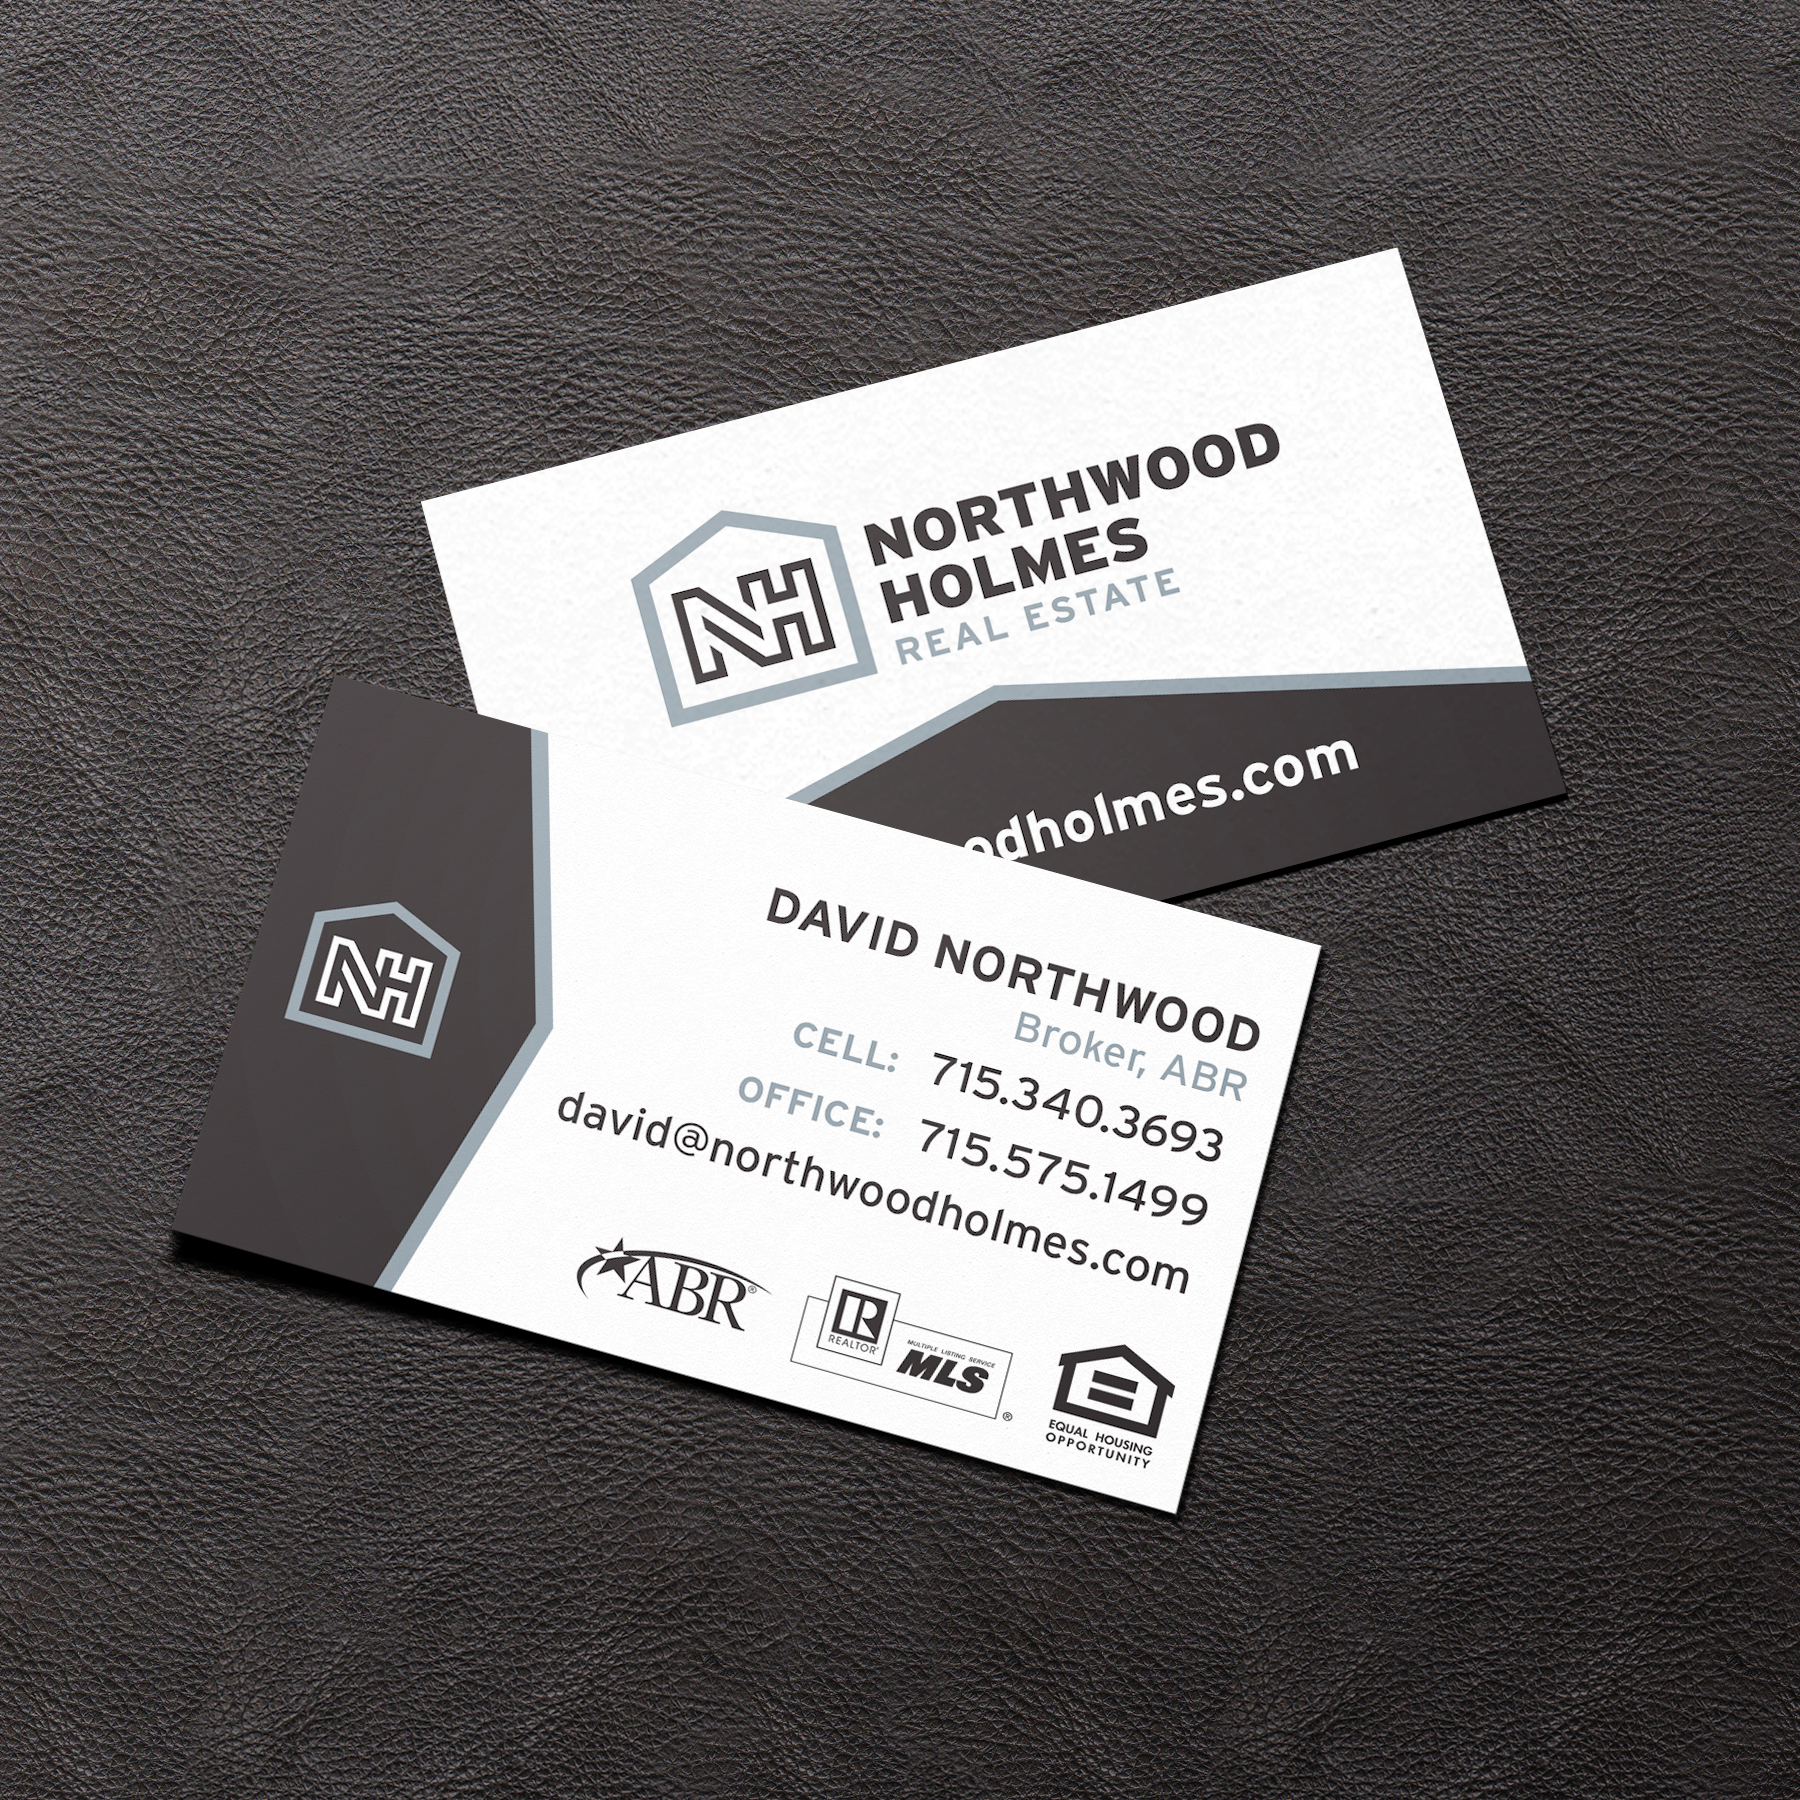 northwoodholmes_businesscard